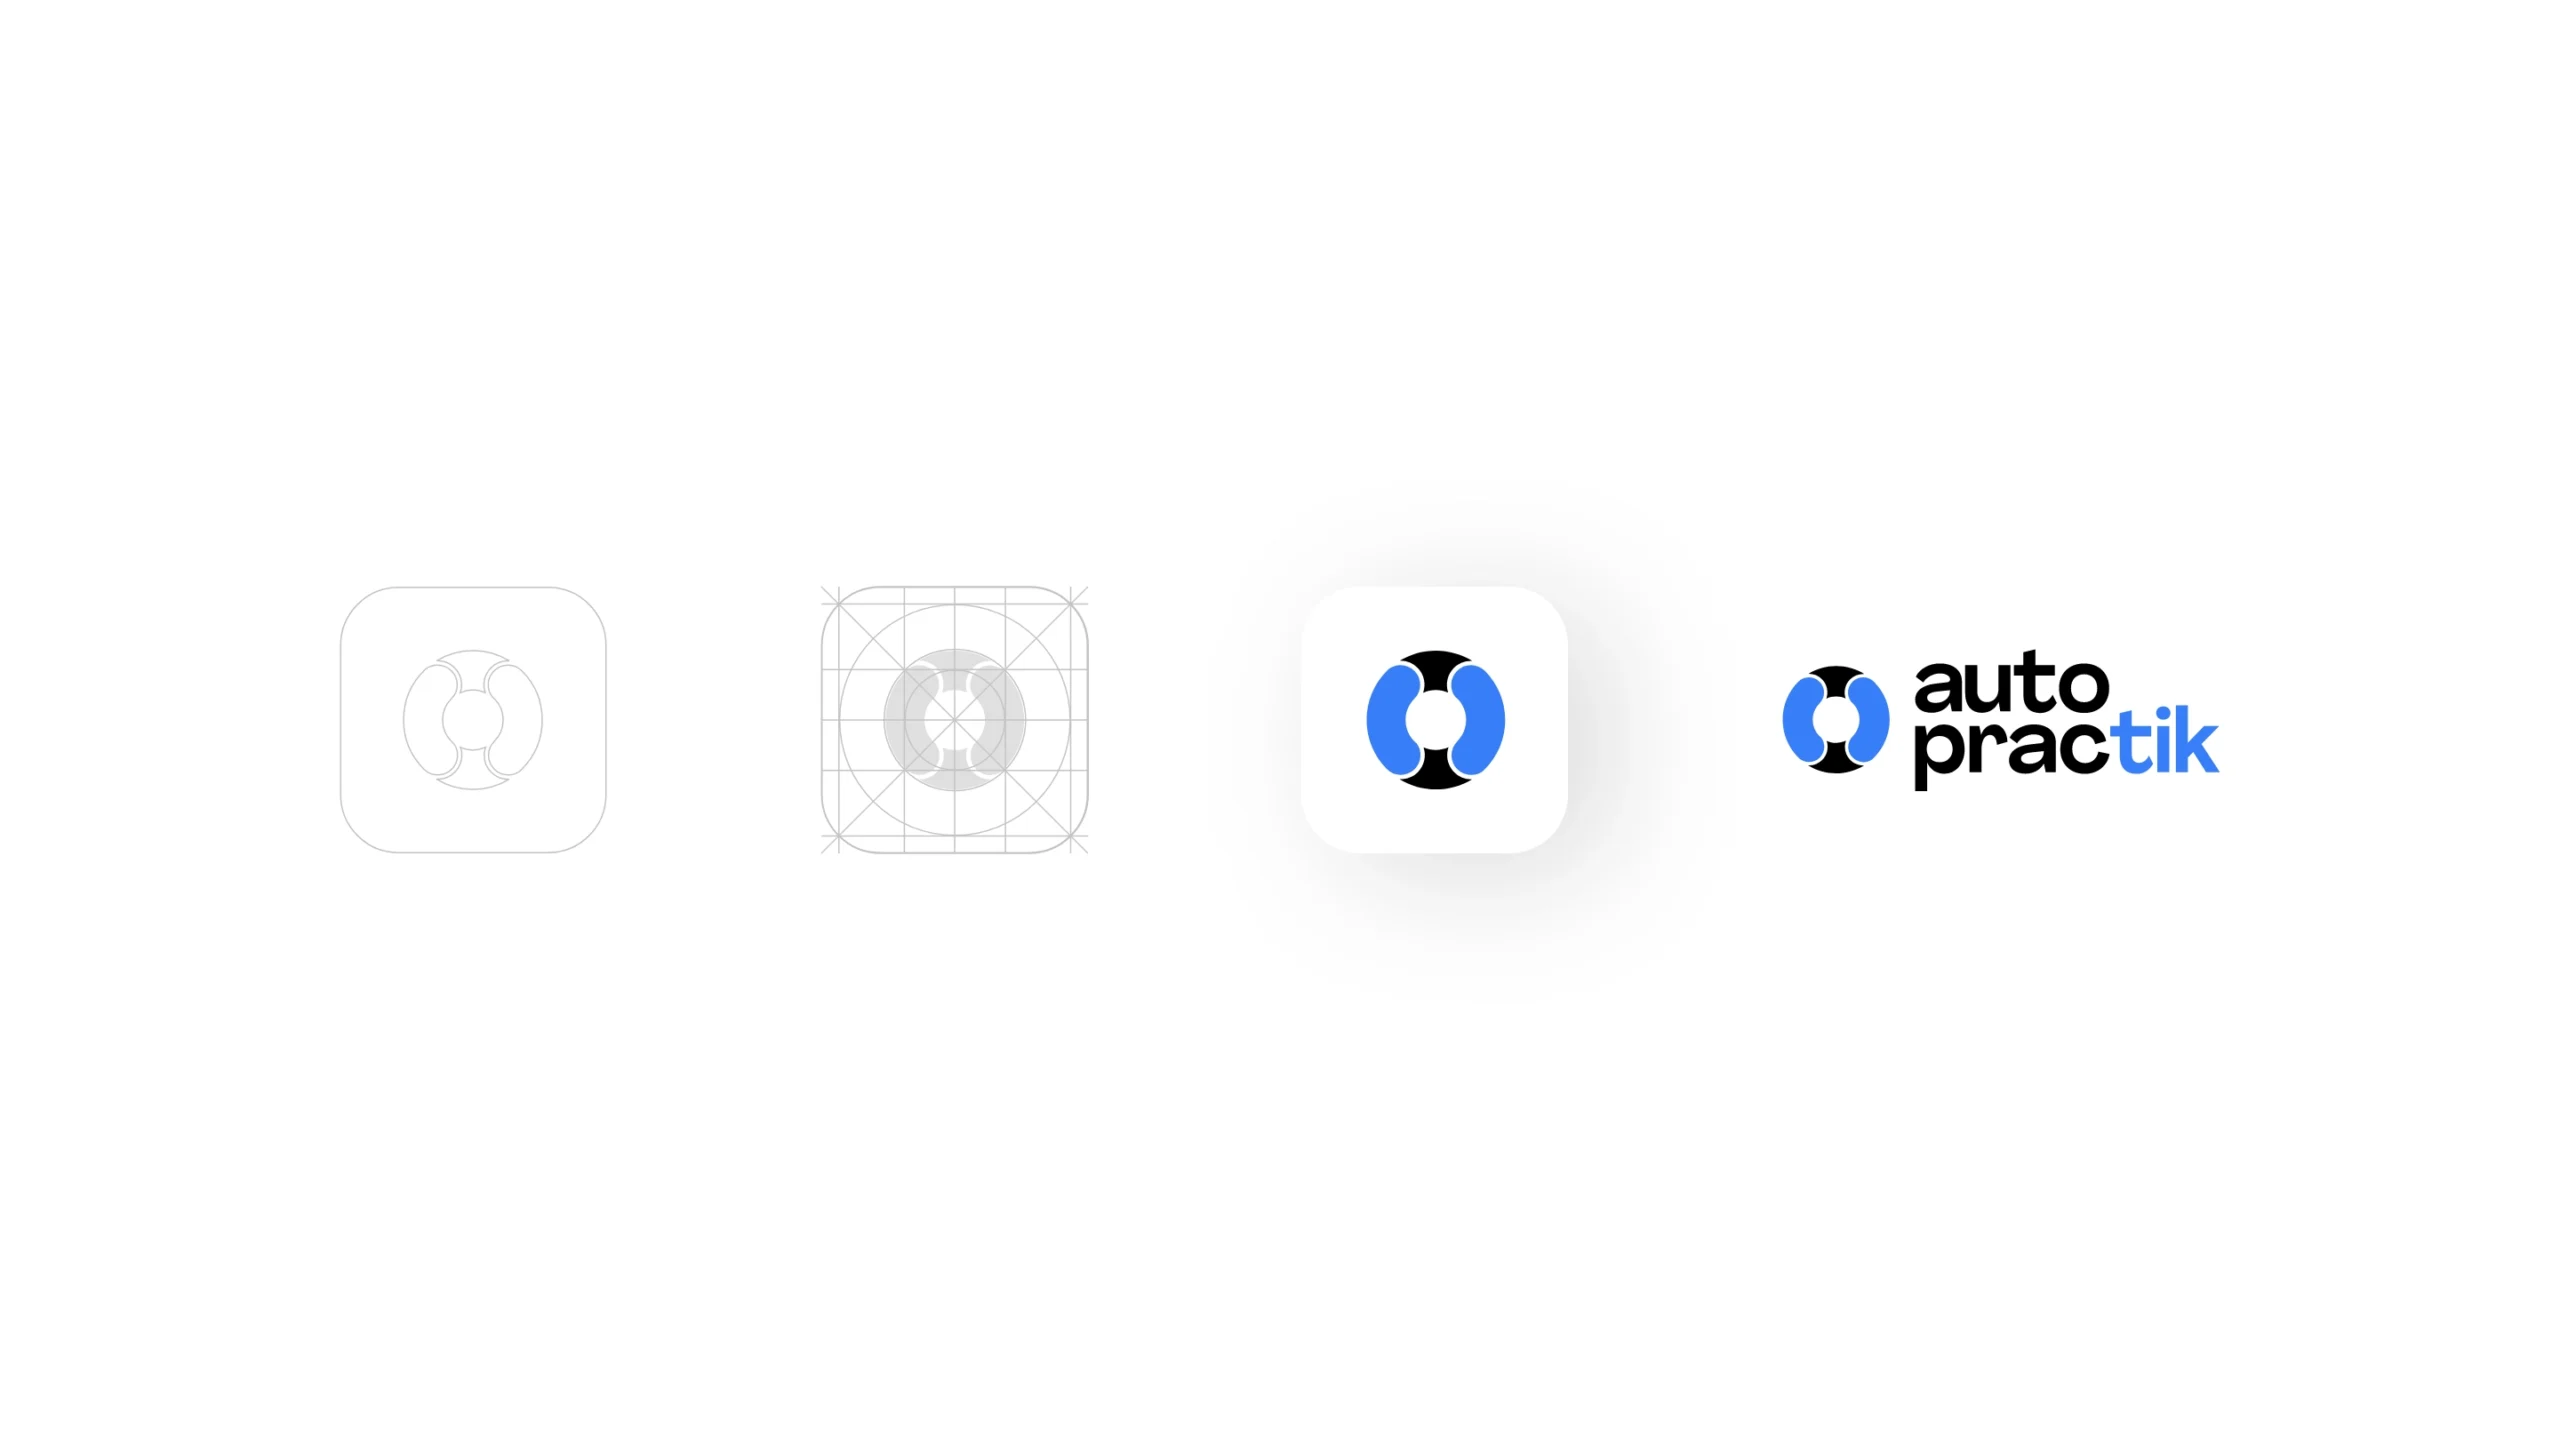 autopractik button logo scaled